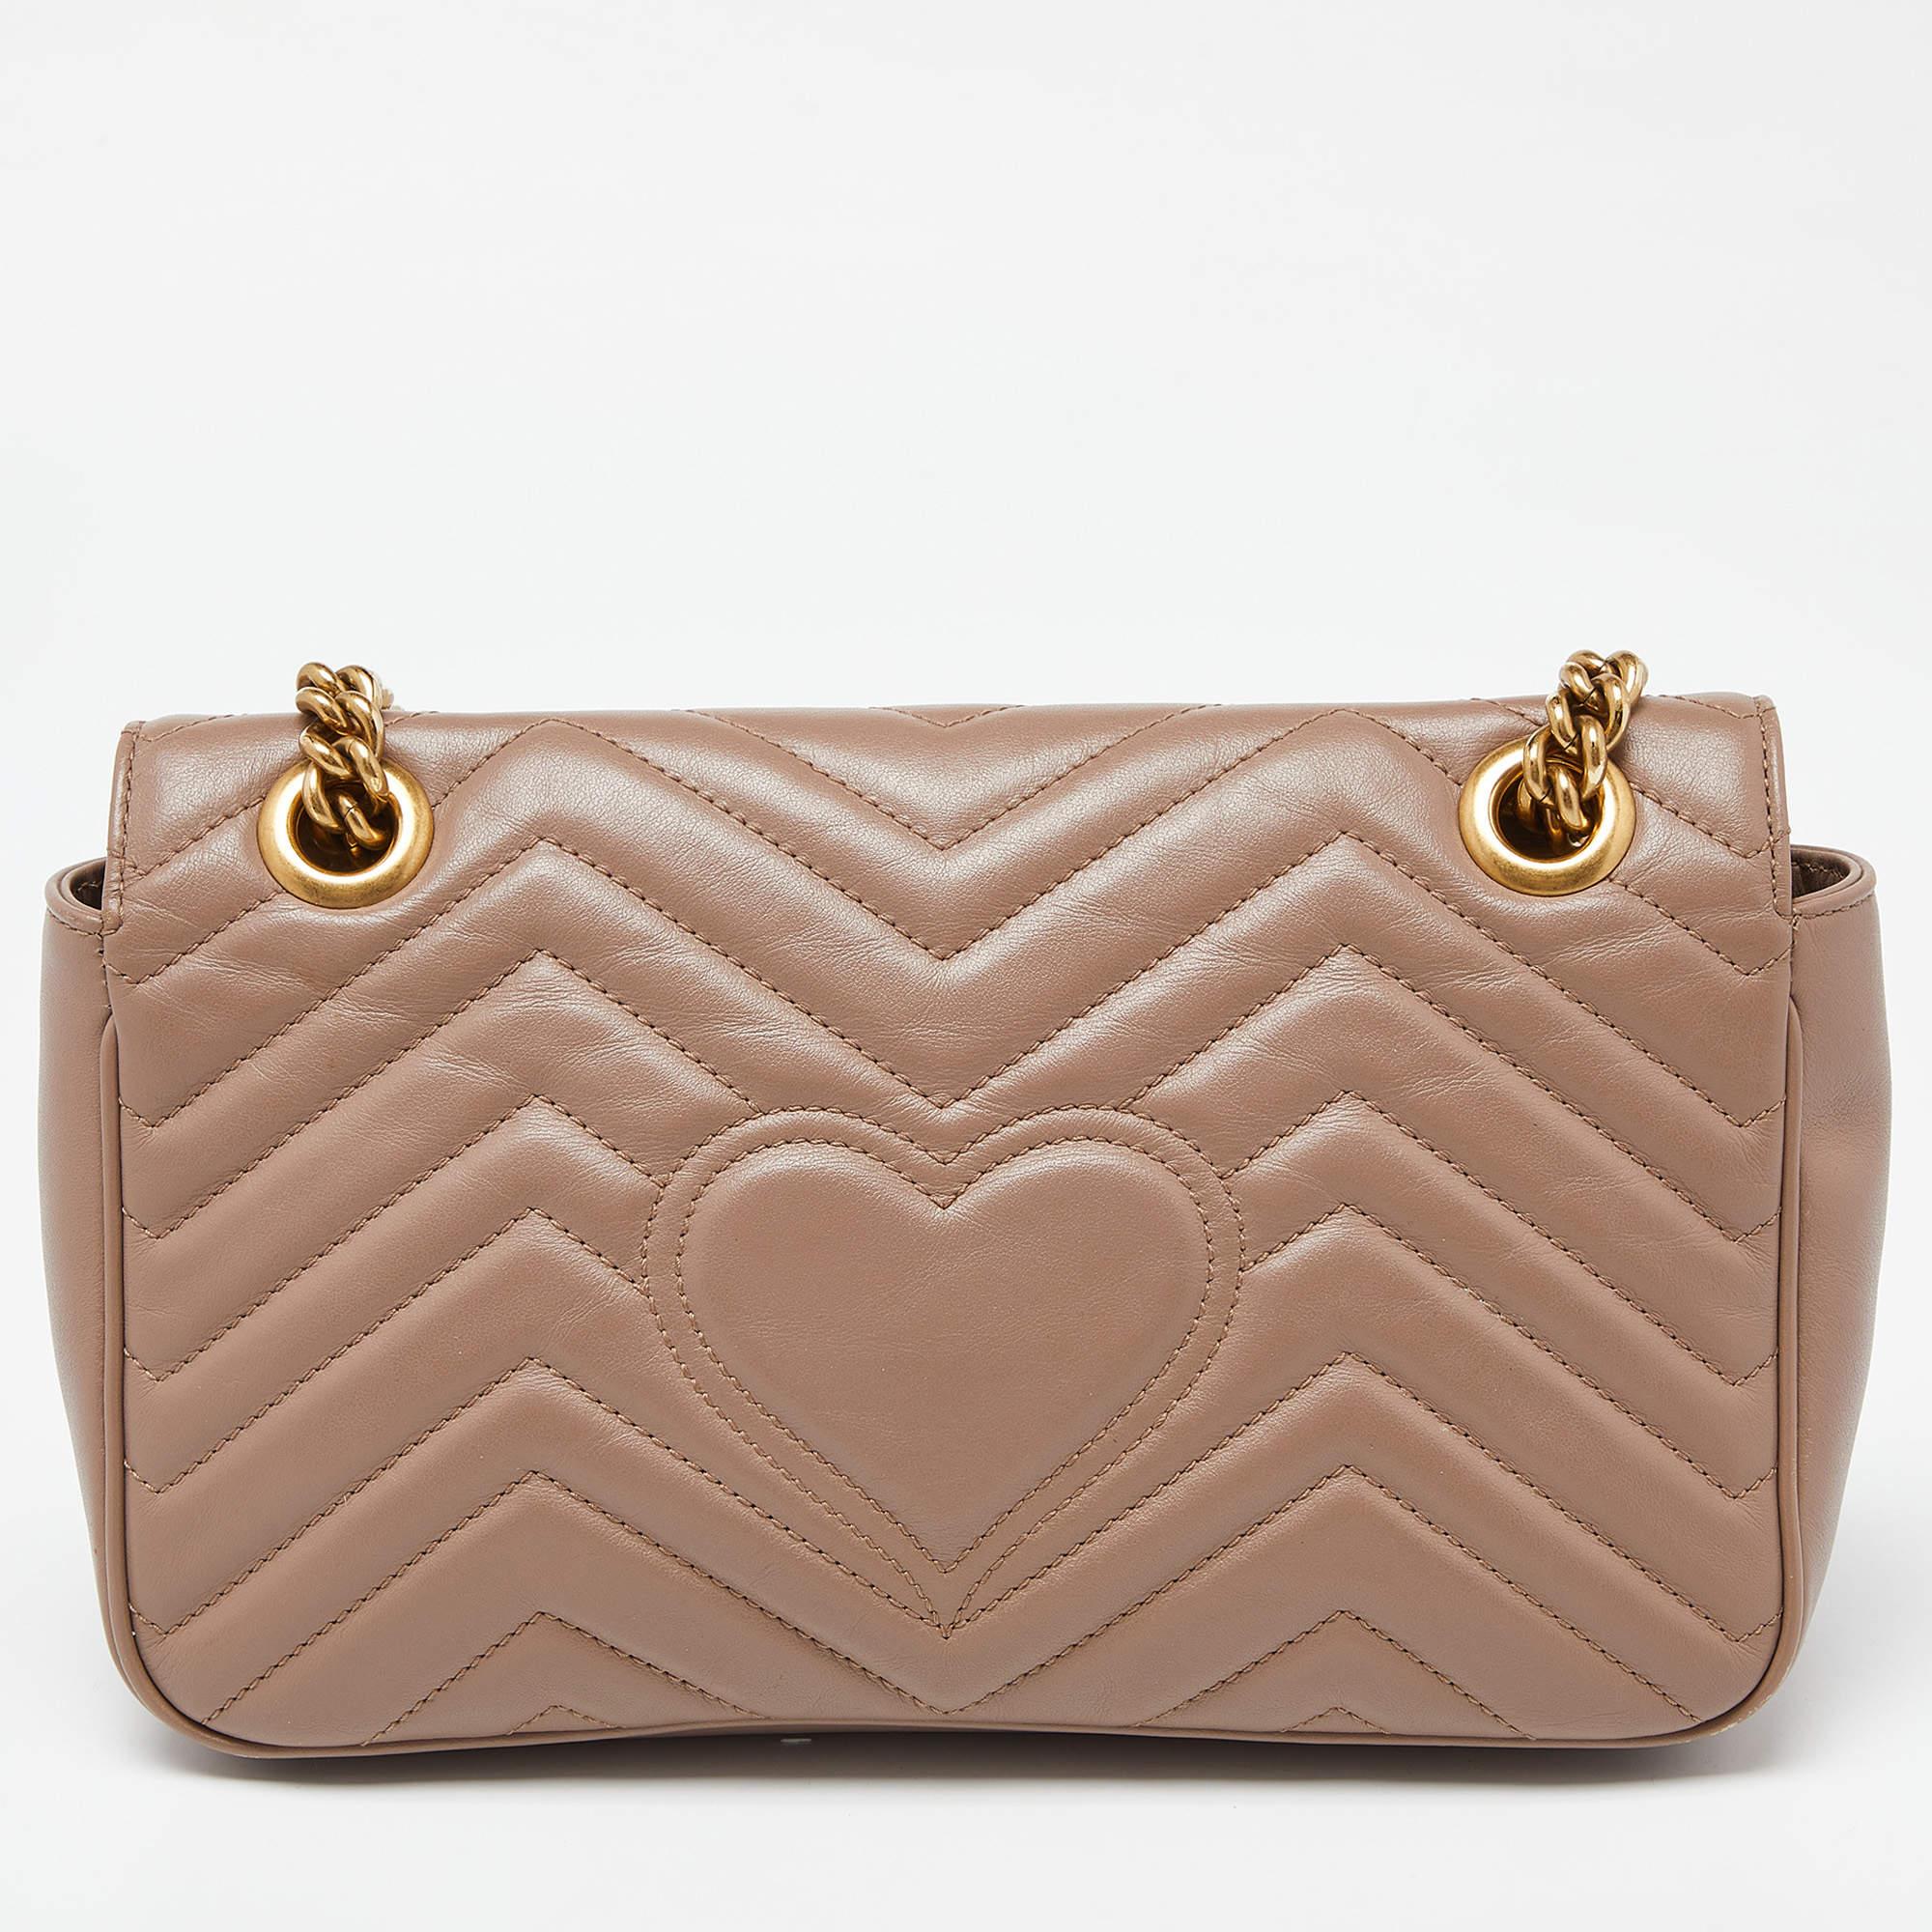 Gucci Beige Matelassé Leather Small GG Marmont Shoulder Bag For Sale 6